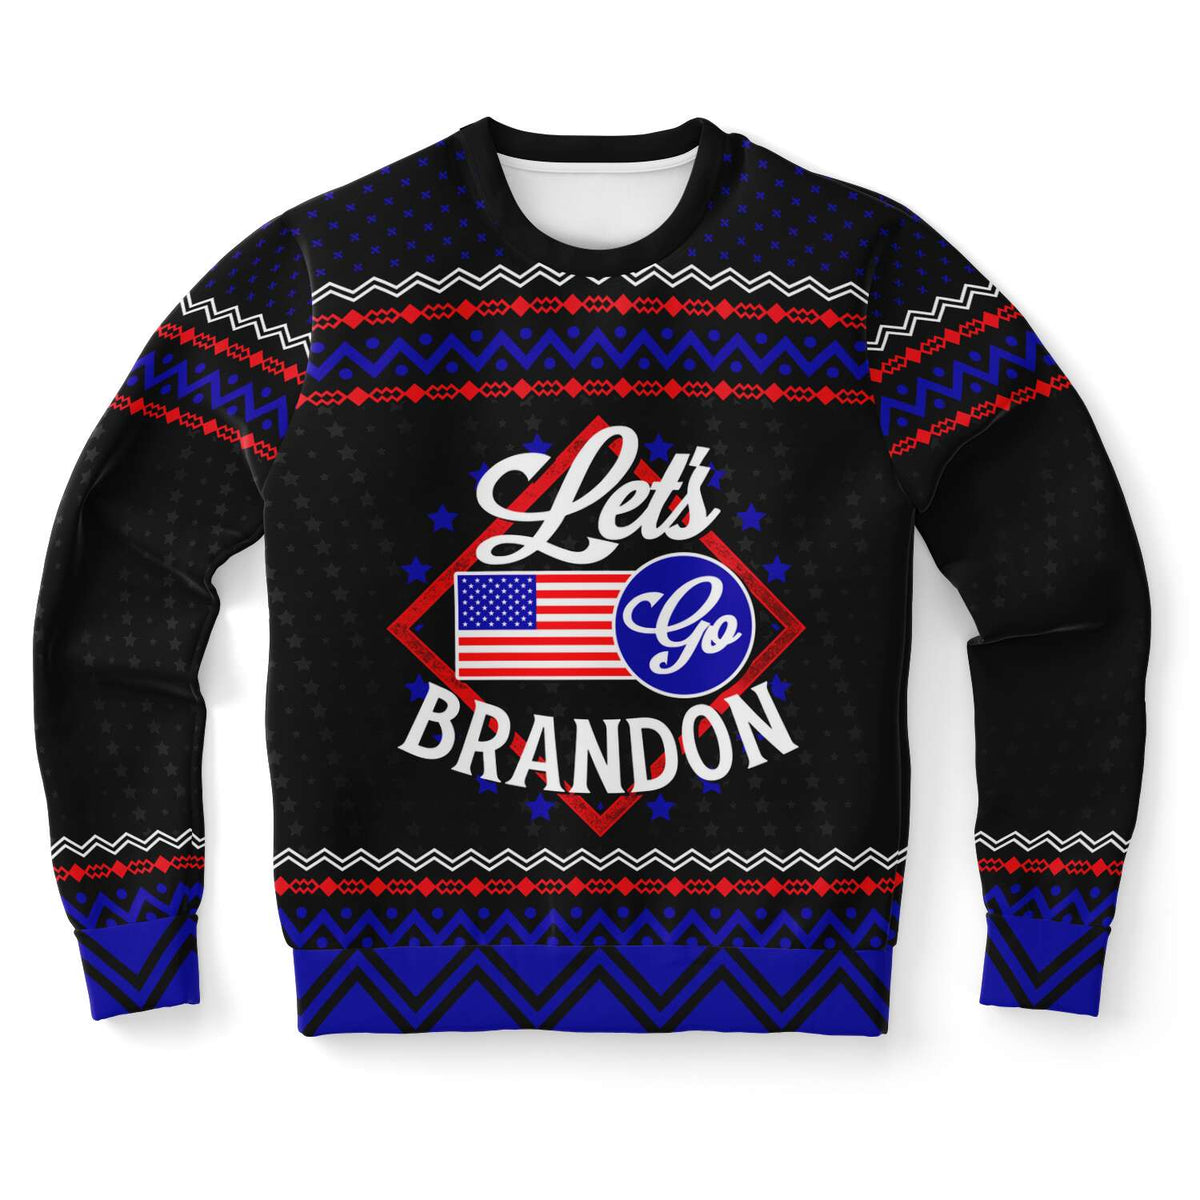 Lets Go Brandon Humorous Ugly Christmas Style Fashion Sweatshirt